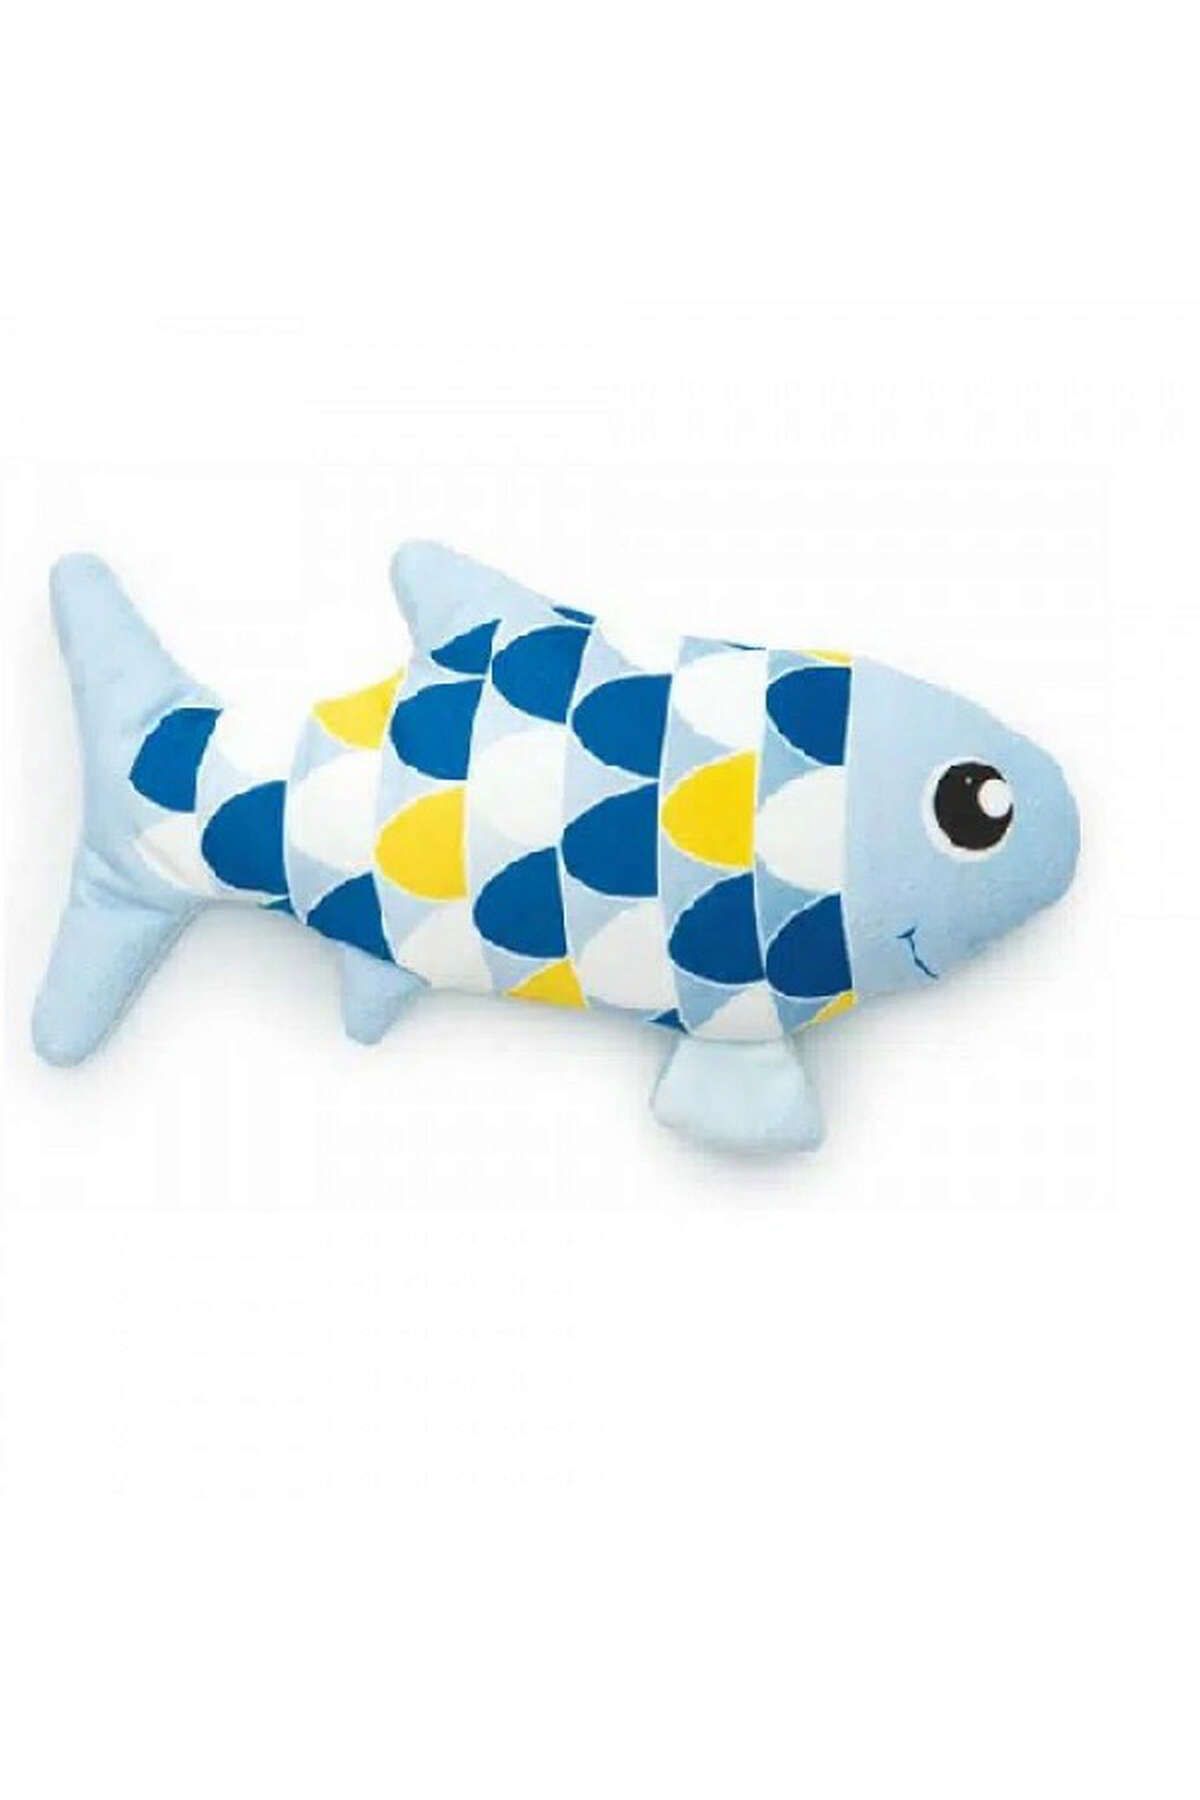 Hagen Groovy Fish Catnipli Kedi Oyuncağı, Mavi 326107